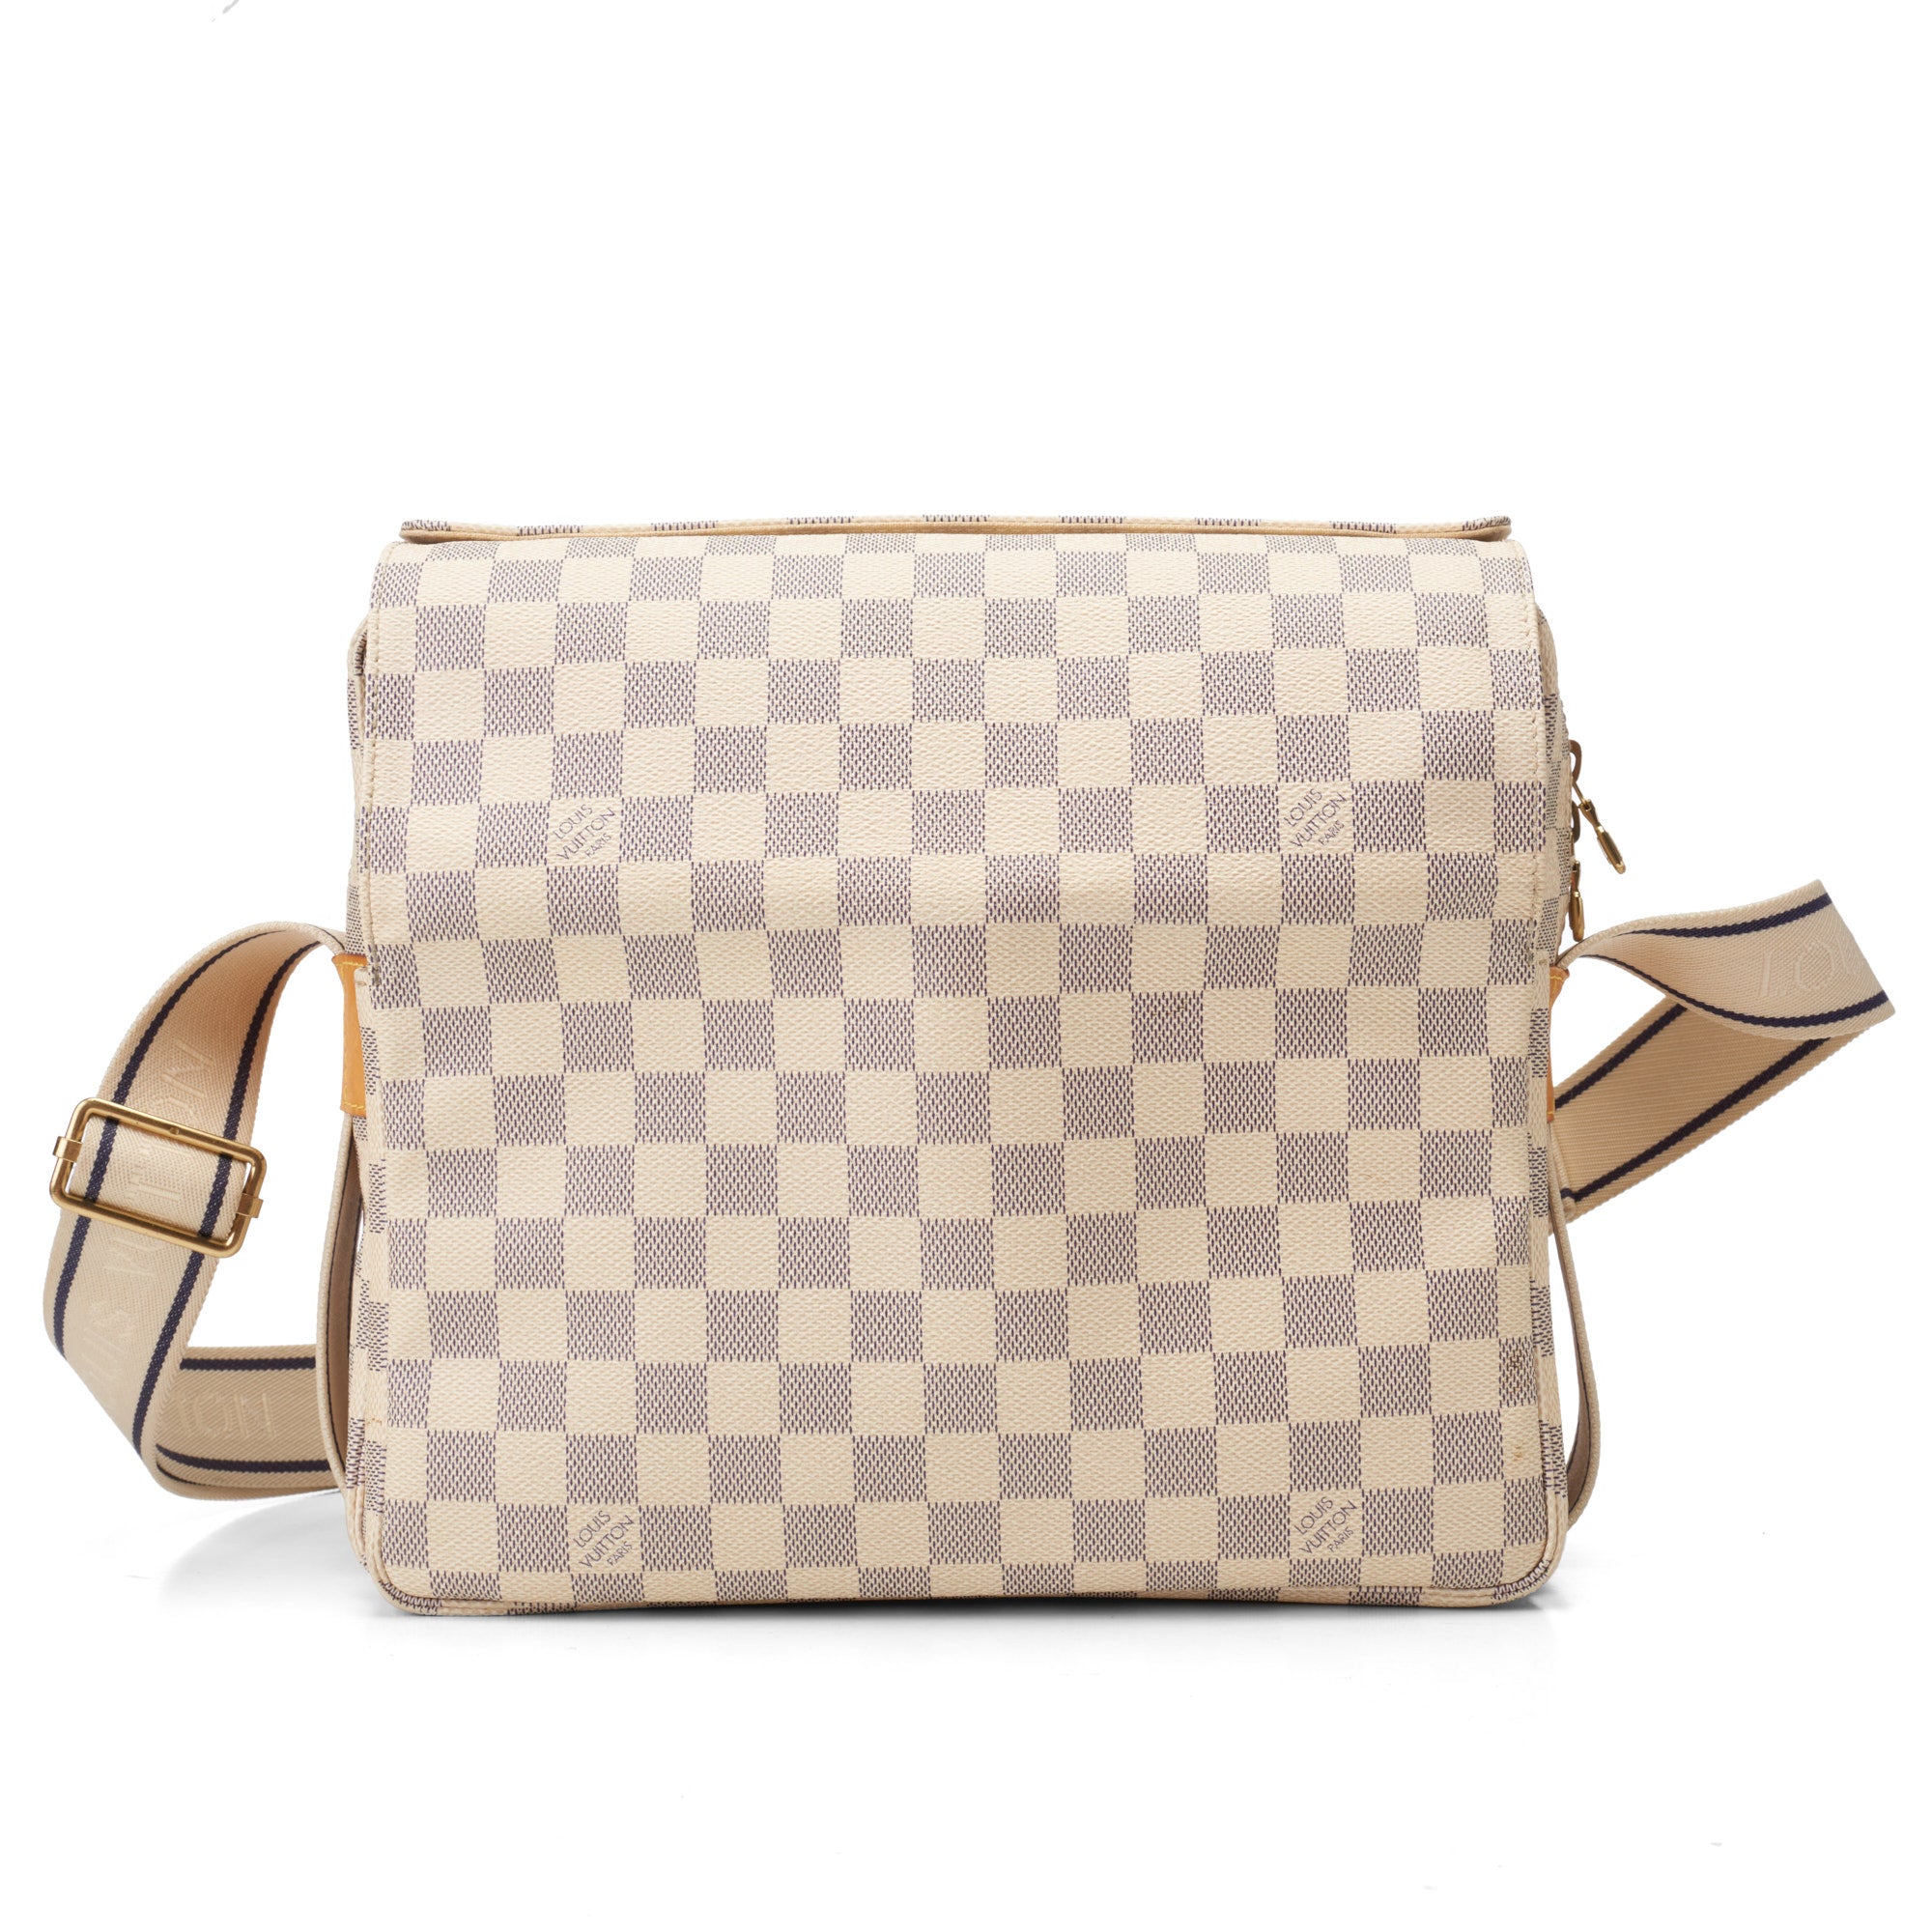 lv handbags for women clearance sale crossbody